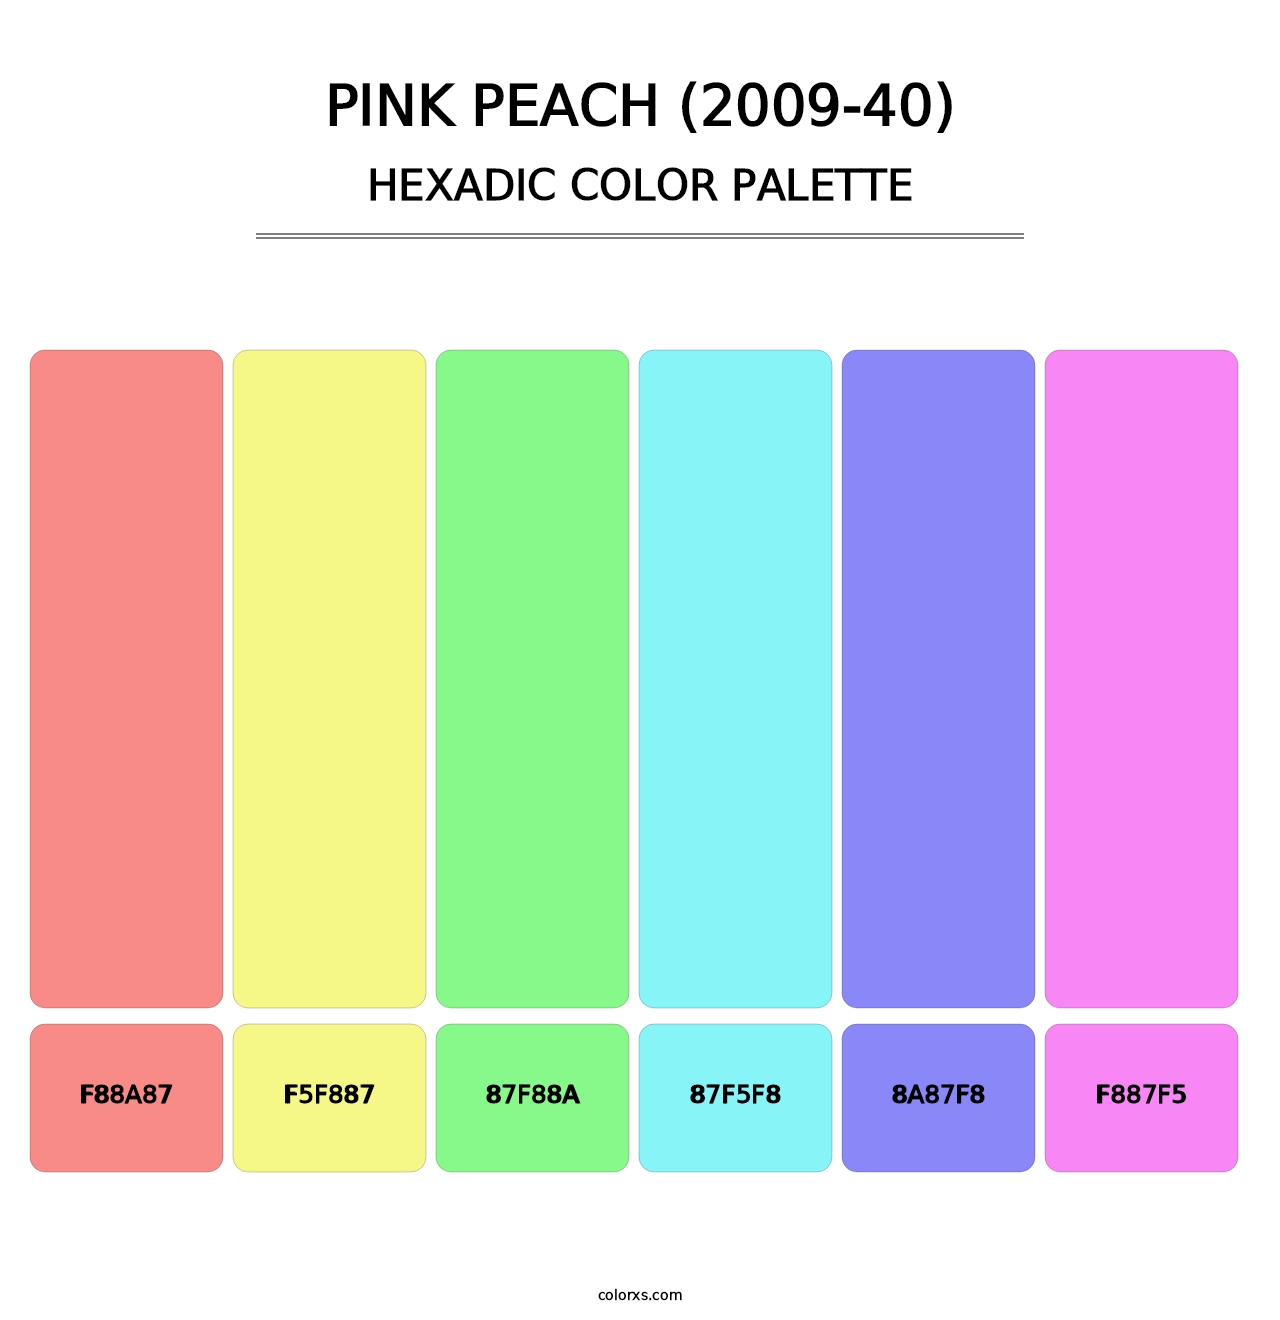 Pink Peach (2009-40) - Hexadic Color Palette